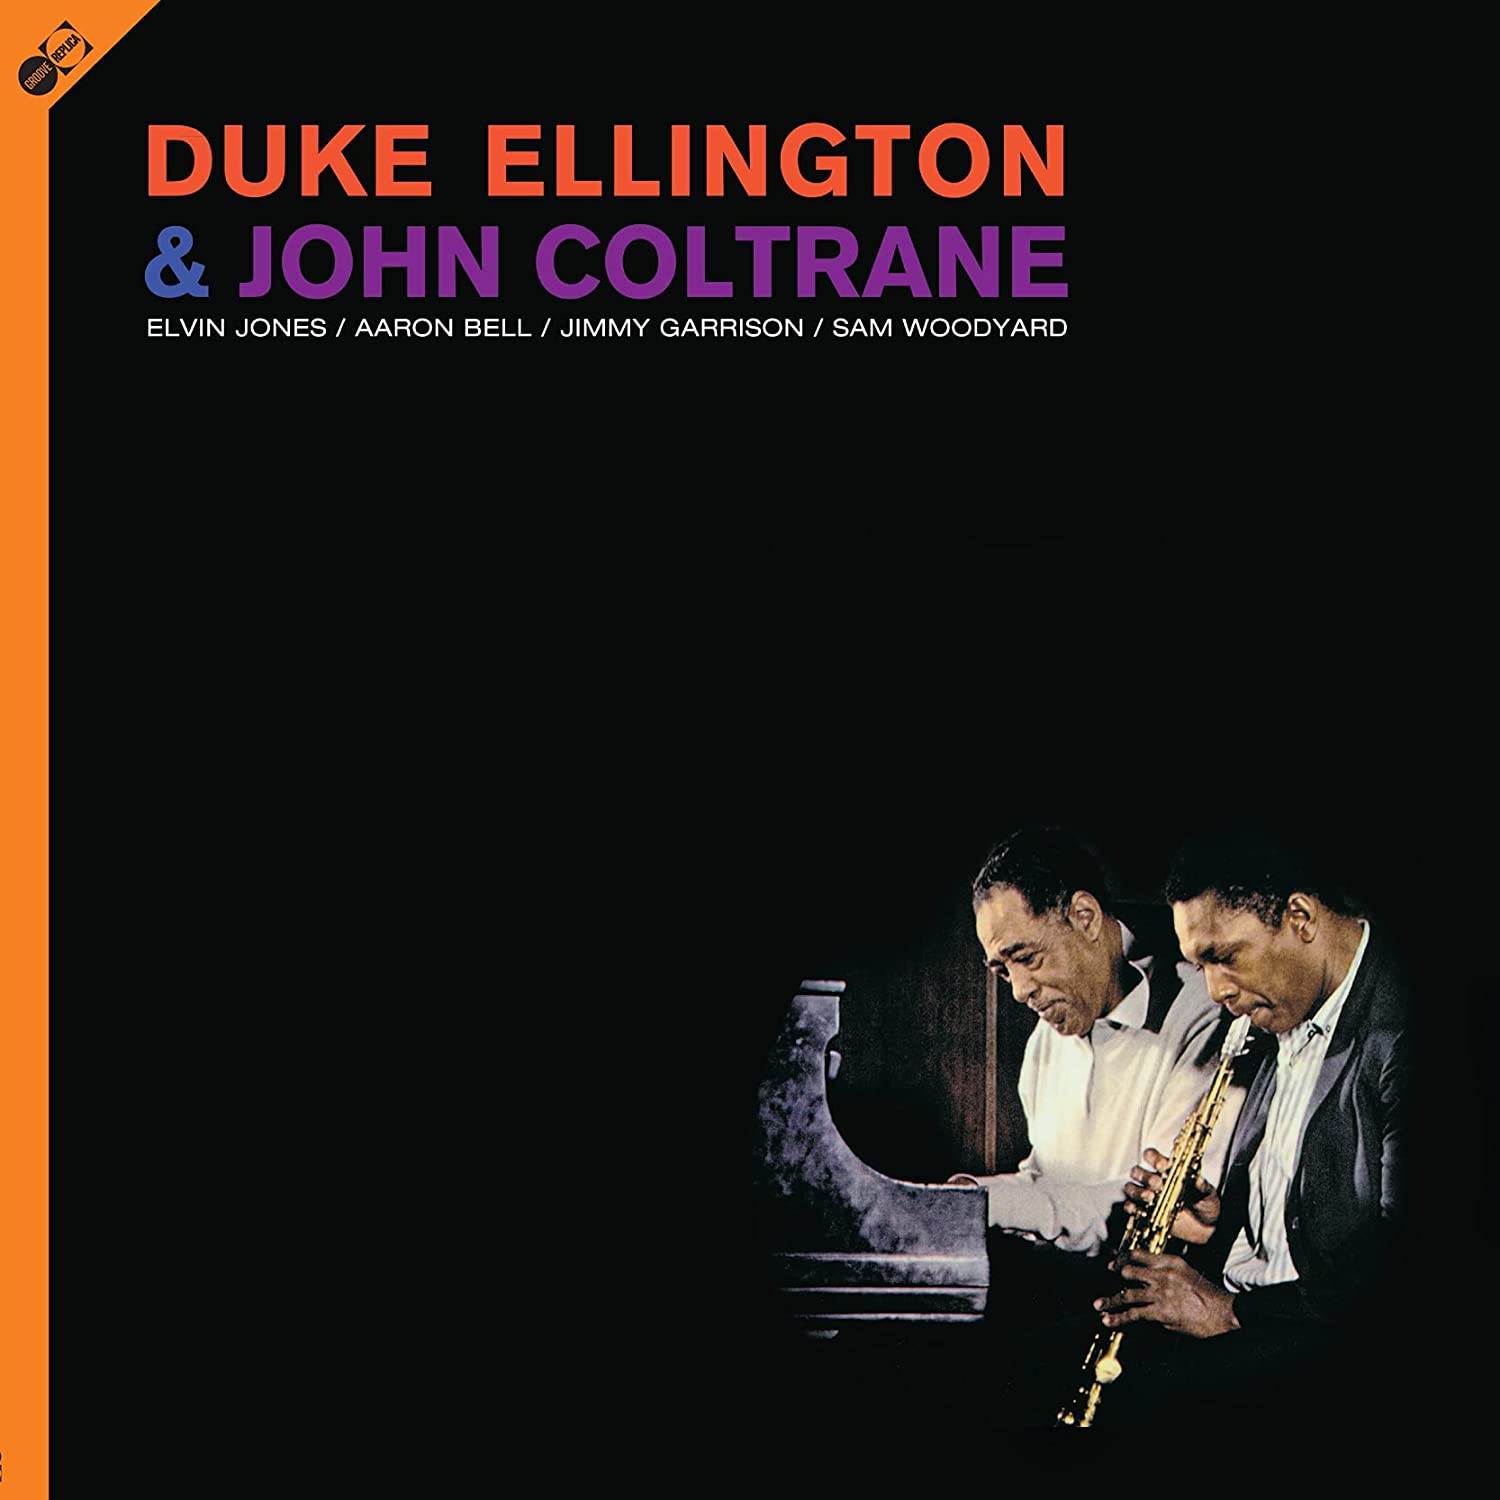 Ellington & Coltrane 